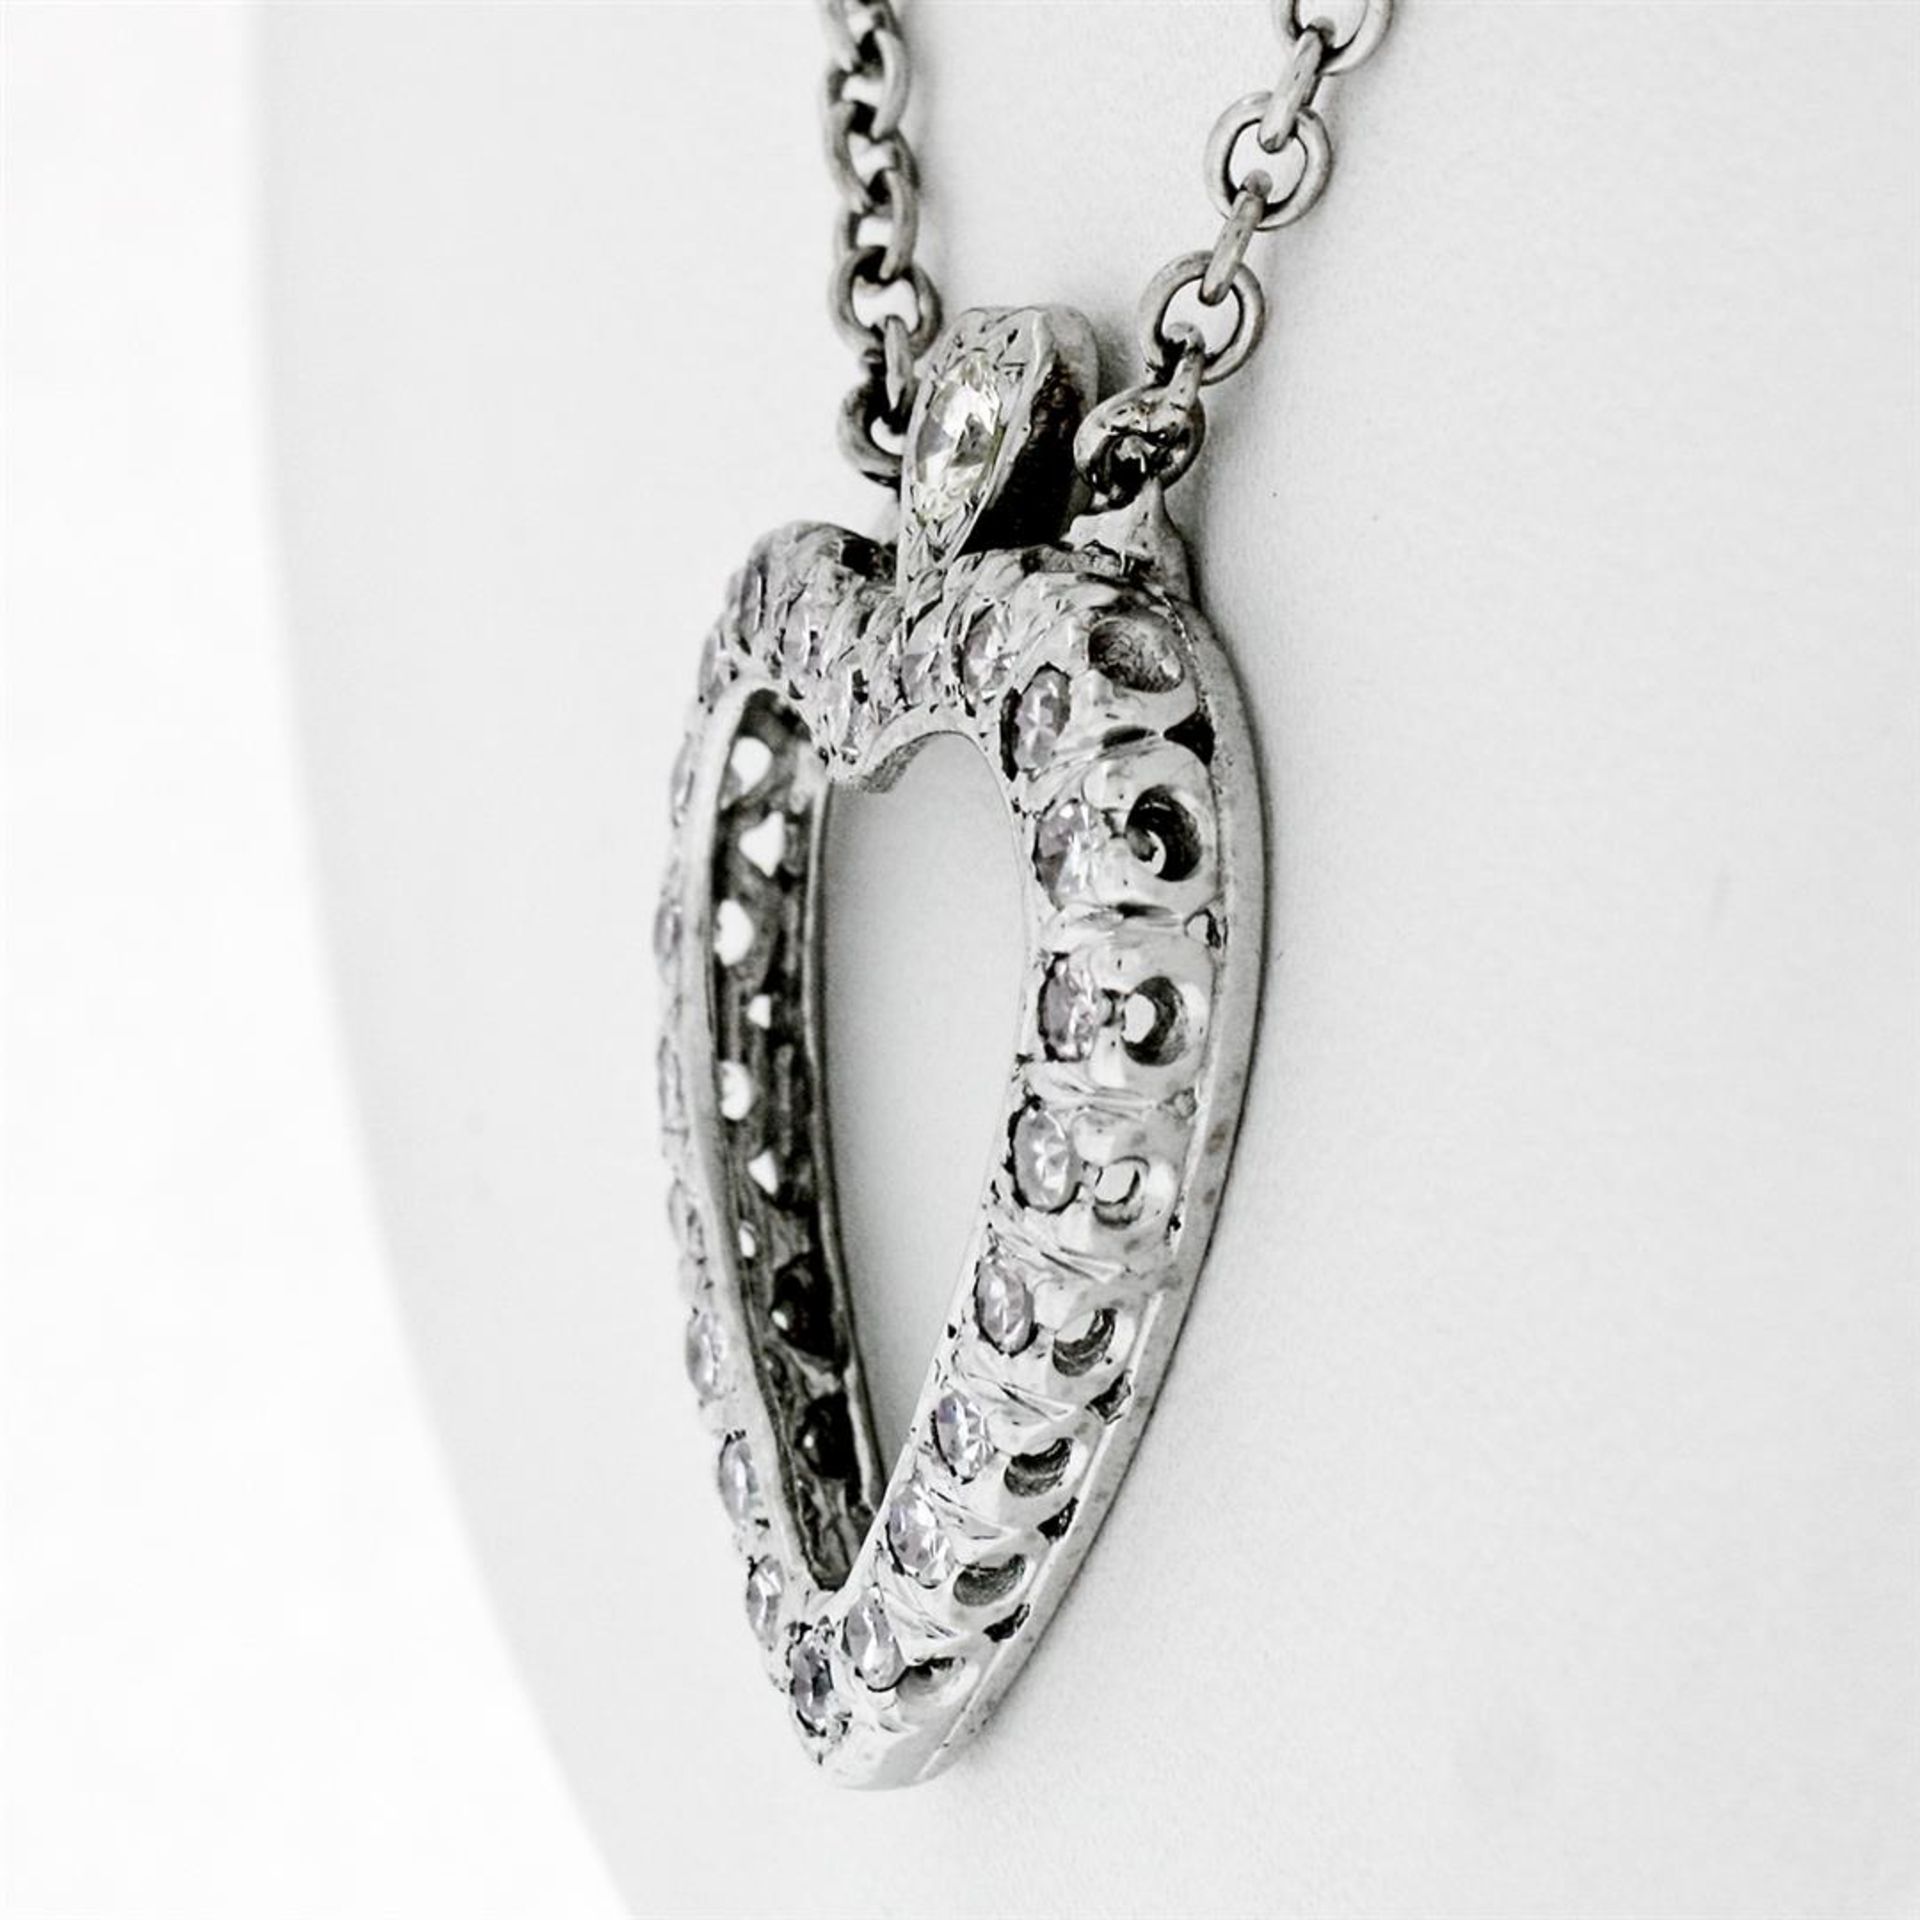 Antique 14k White Gold 1.00ctw Single Cut Diamond Open Heart Pendant Necklace - Image 4 of 6